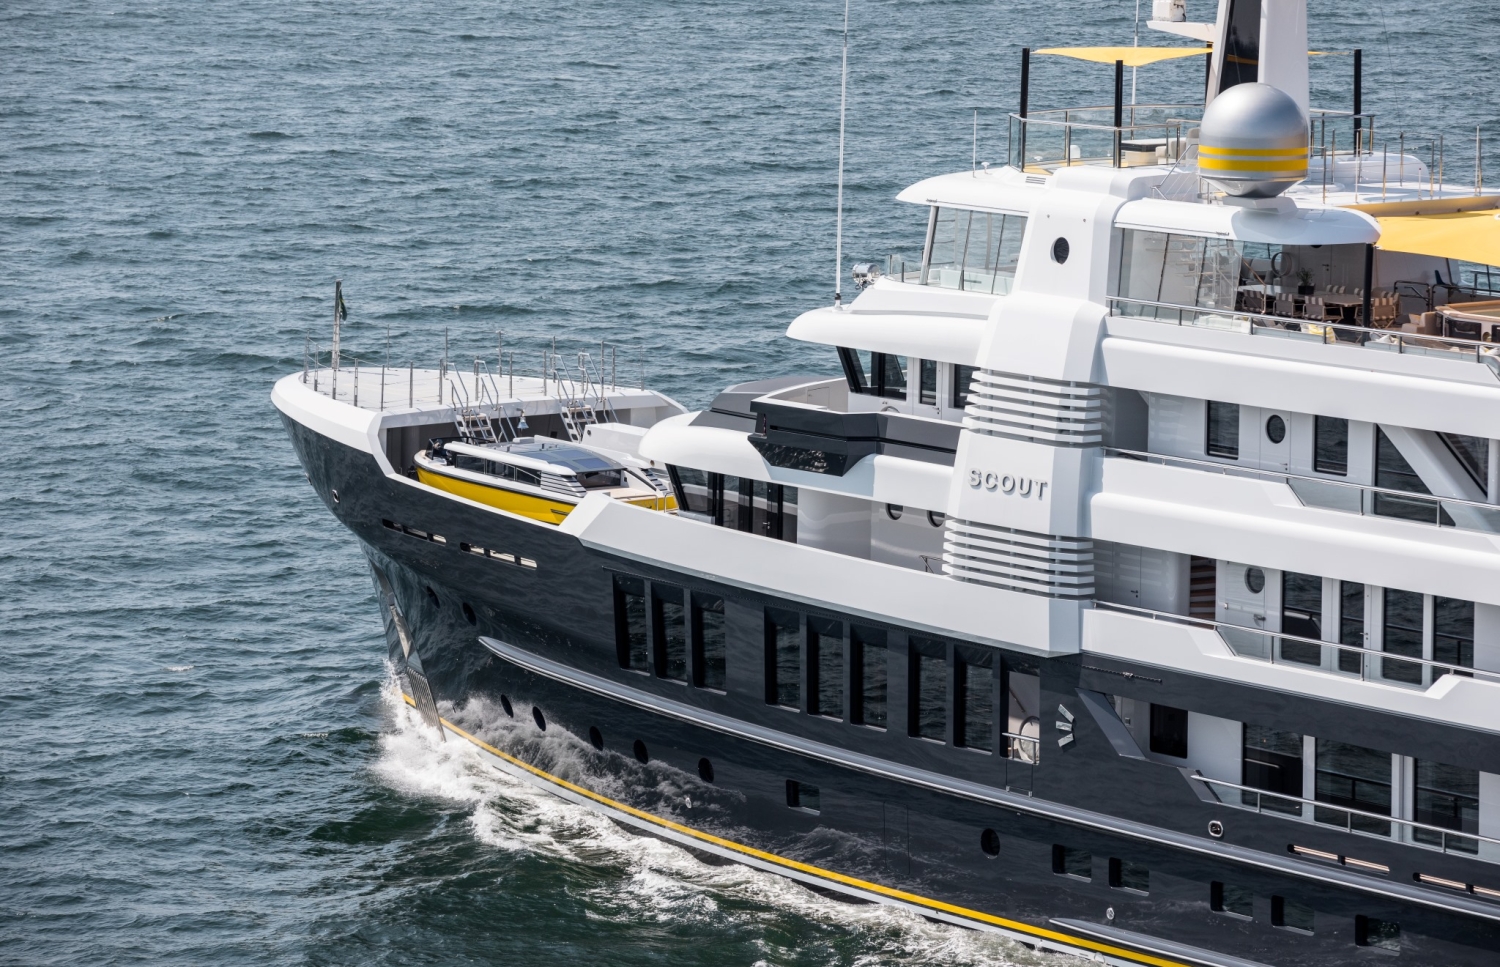 Royal Hakvoort, Luxury Yacht Builder